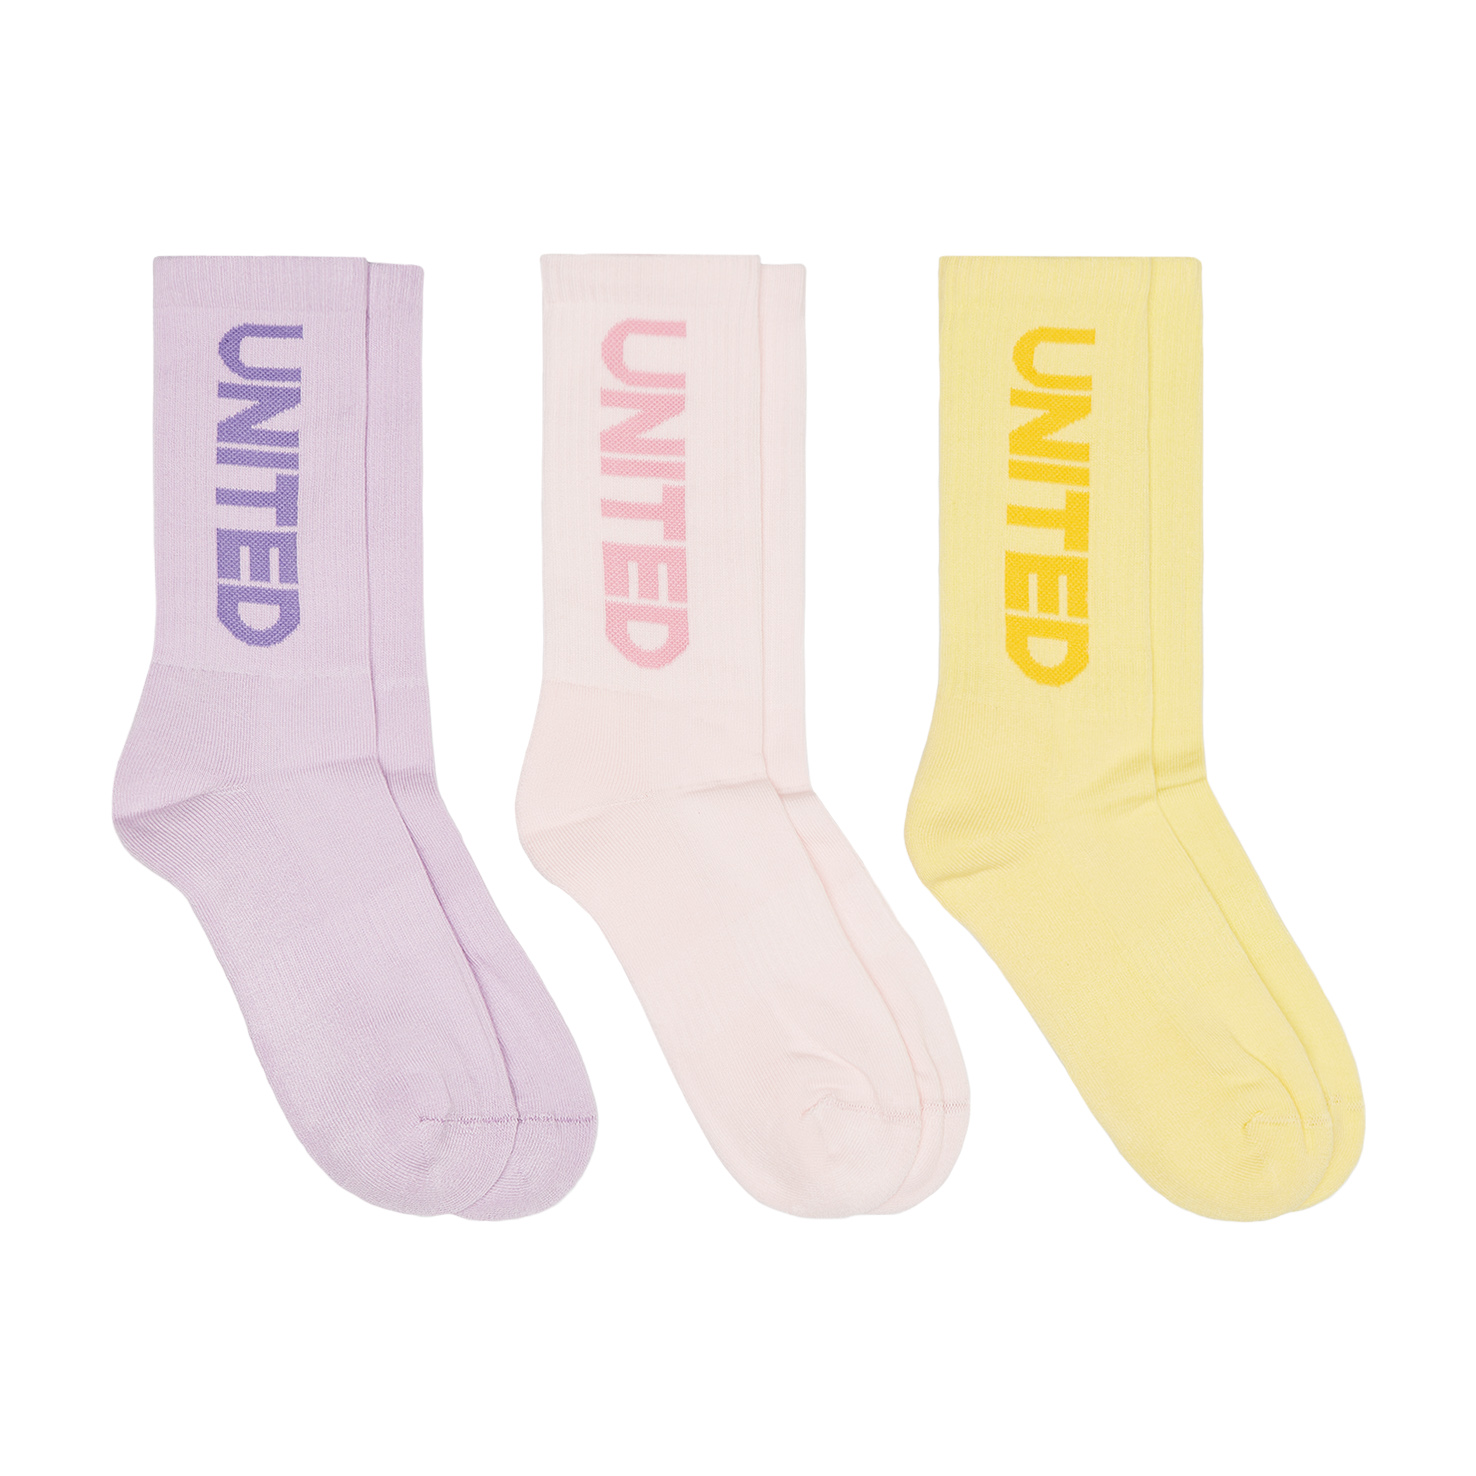 Носки UNITED UNITED, размер 36-40, цвет разноцветный